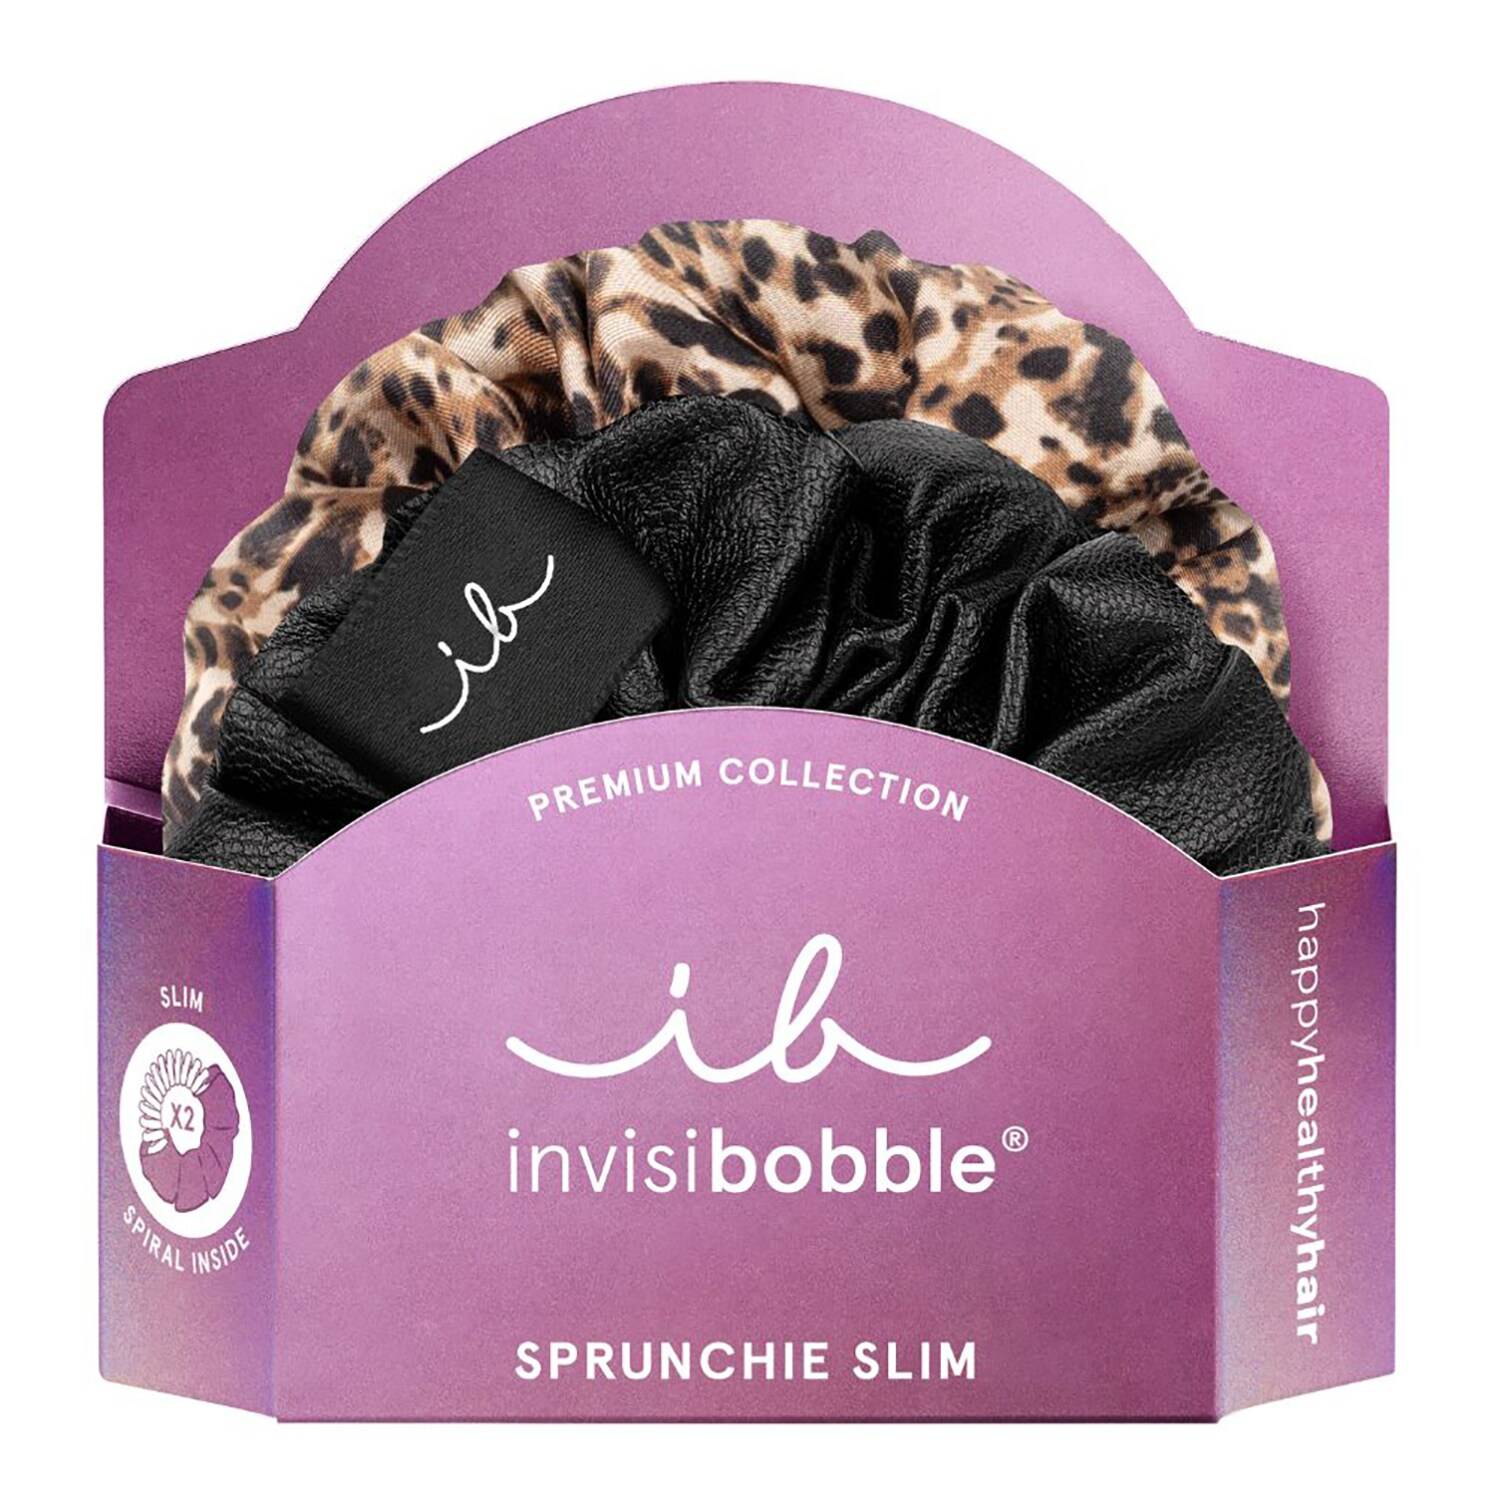 Invisibobble Sprunchie Slim Premium Leo Is The New Black Hair Scrunchies Set